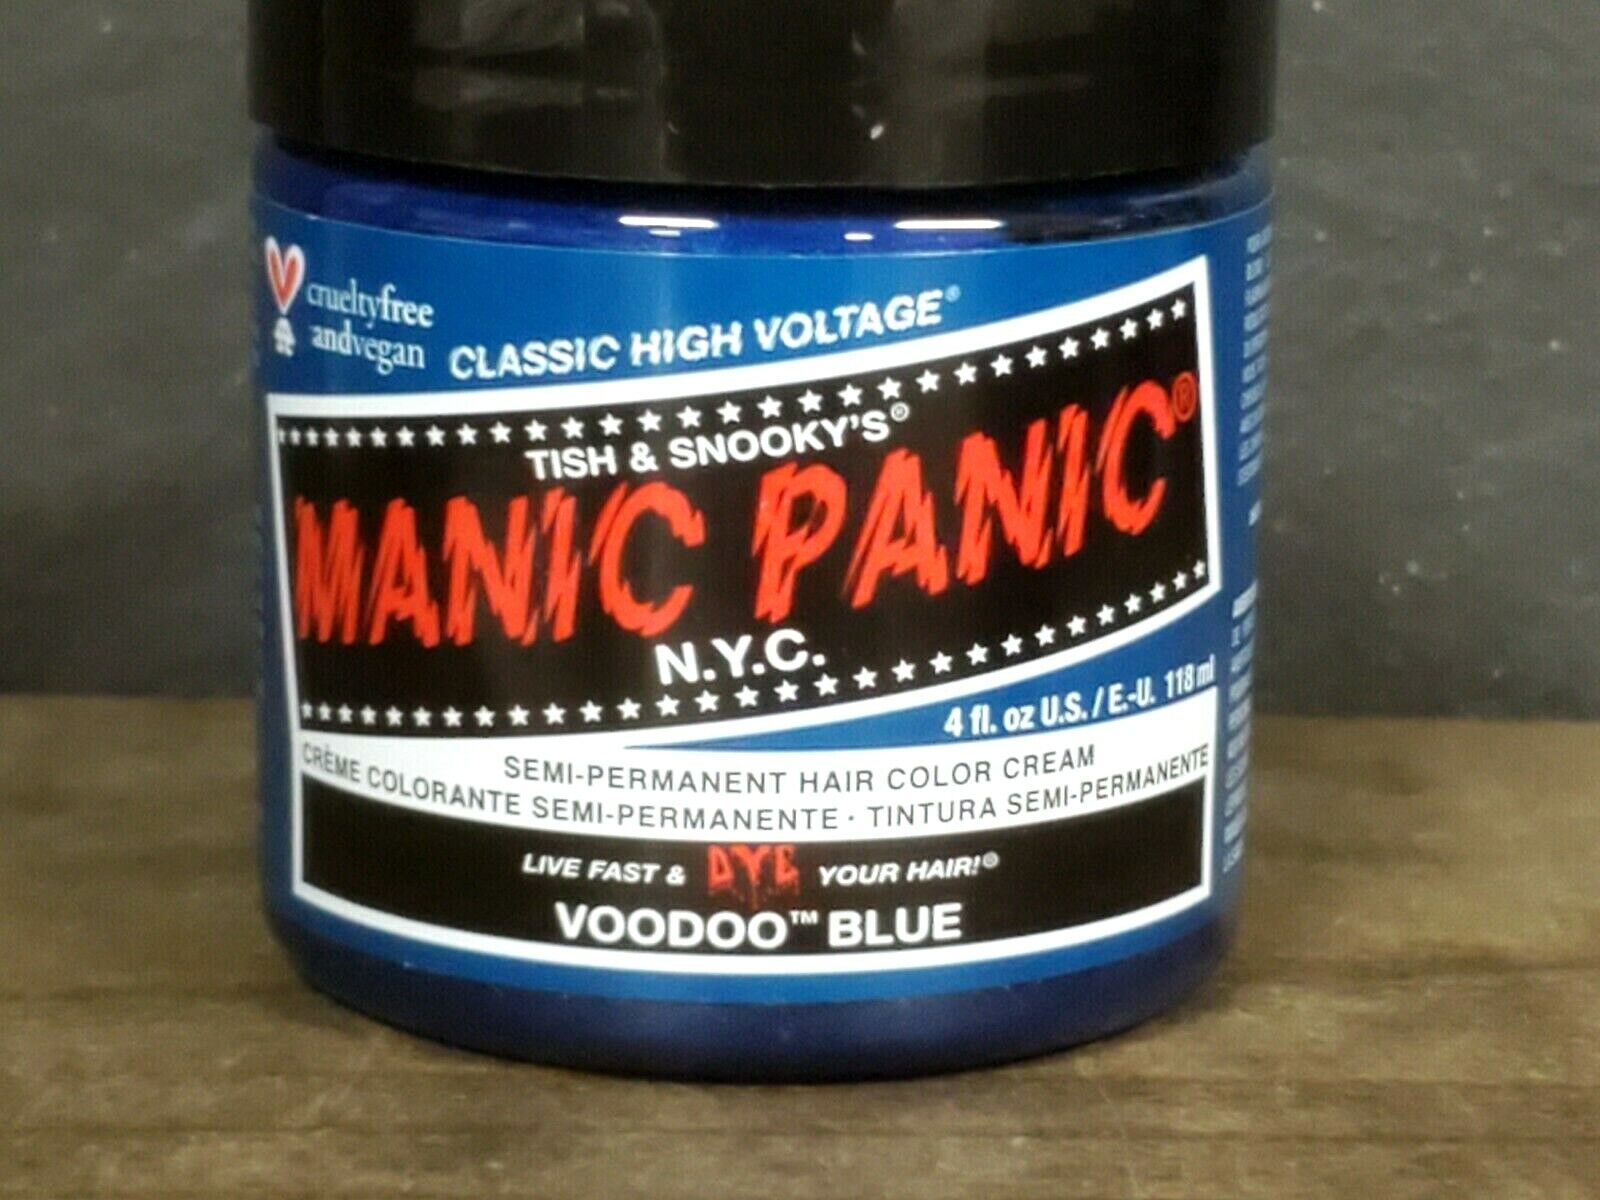 Manic Panic VOODOO BLUE classic high voltage semi-permanent hair color cream